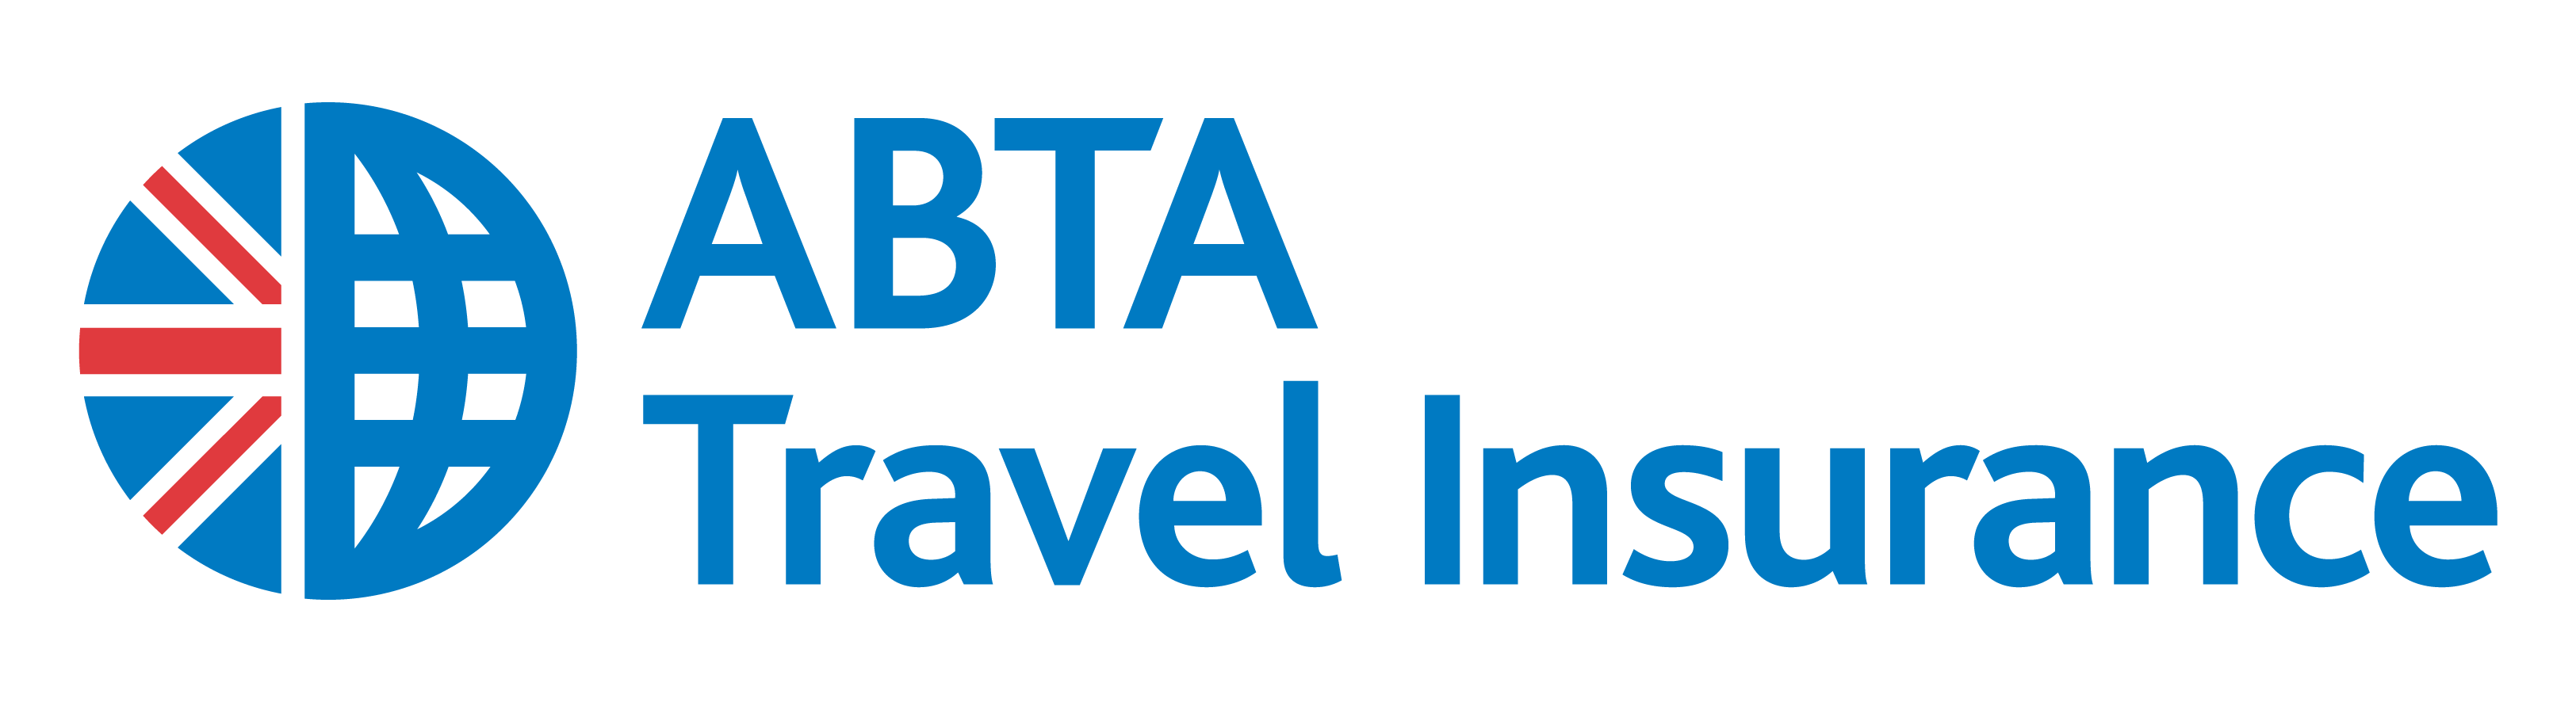 abta travel insurance promo code